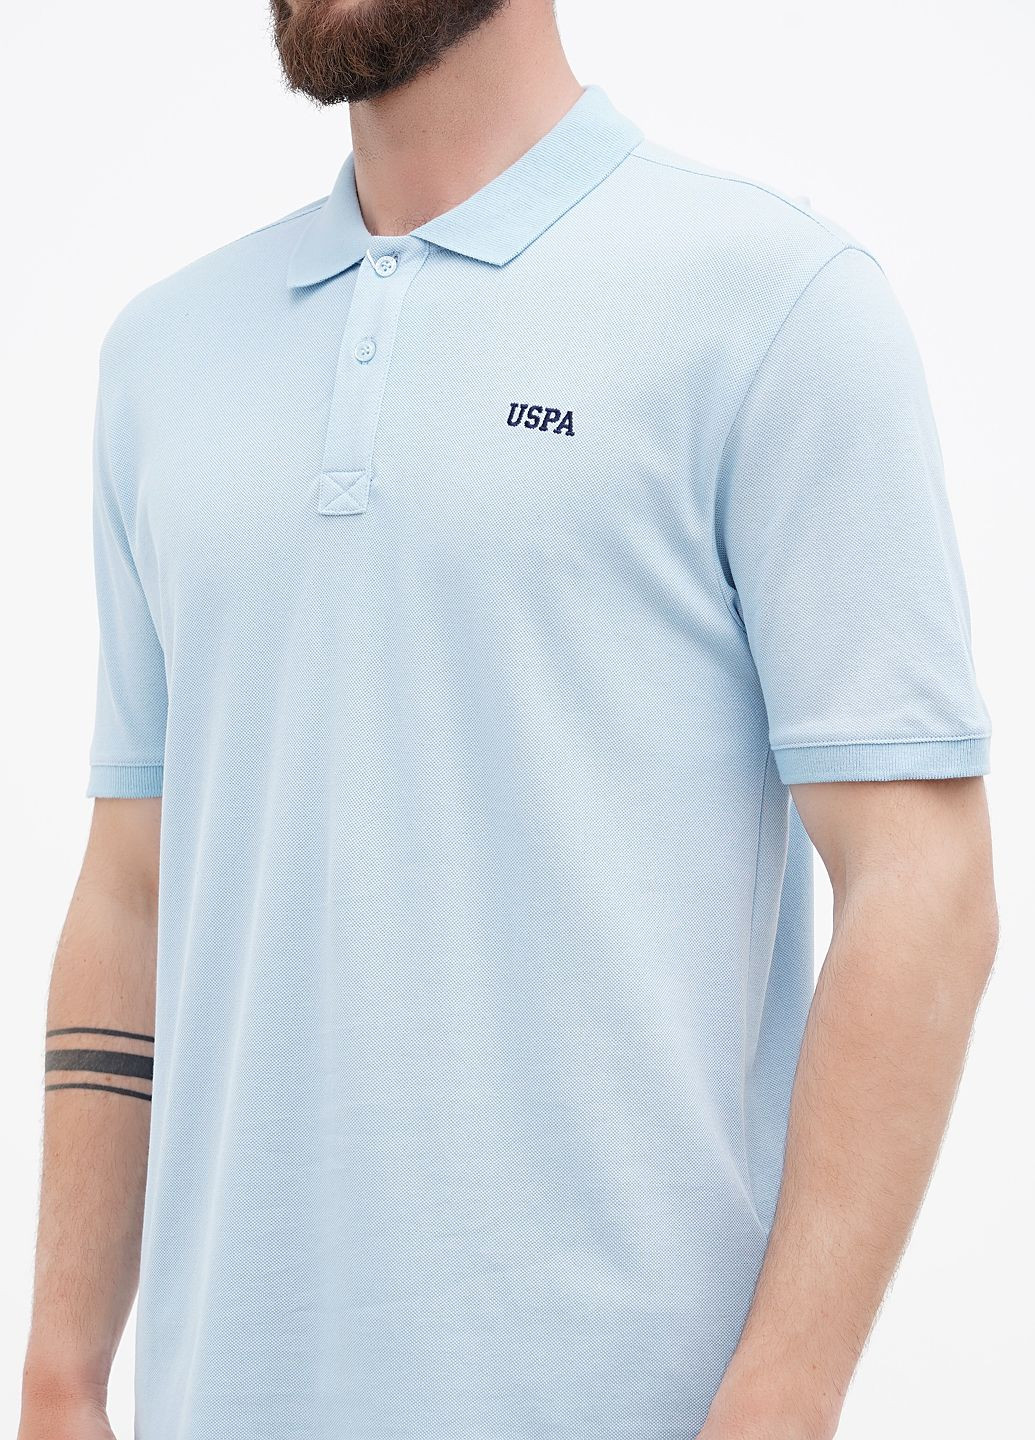 Голубой футболка-футболка поло u.s. polo assn мужская для мужчин U.S. Polo Assn.